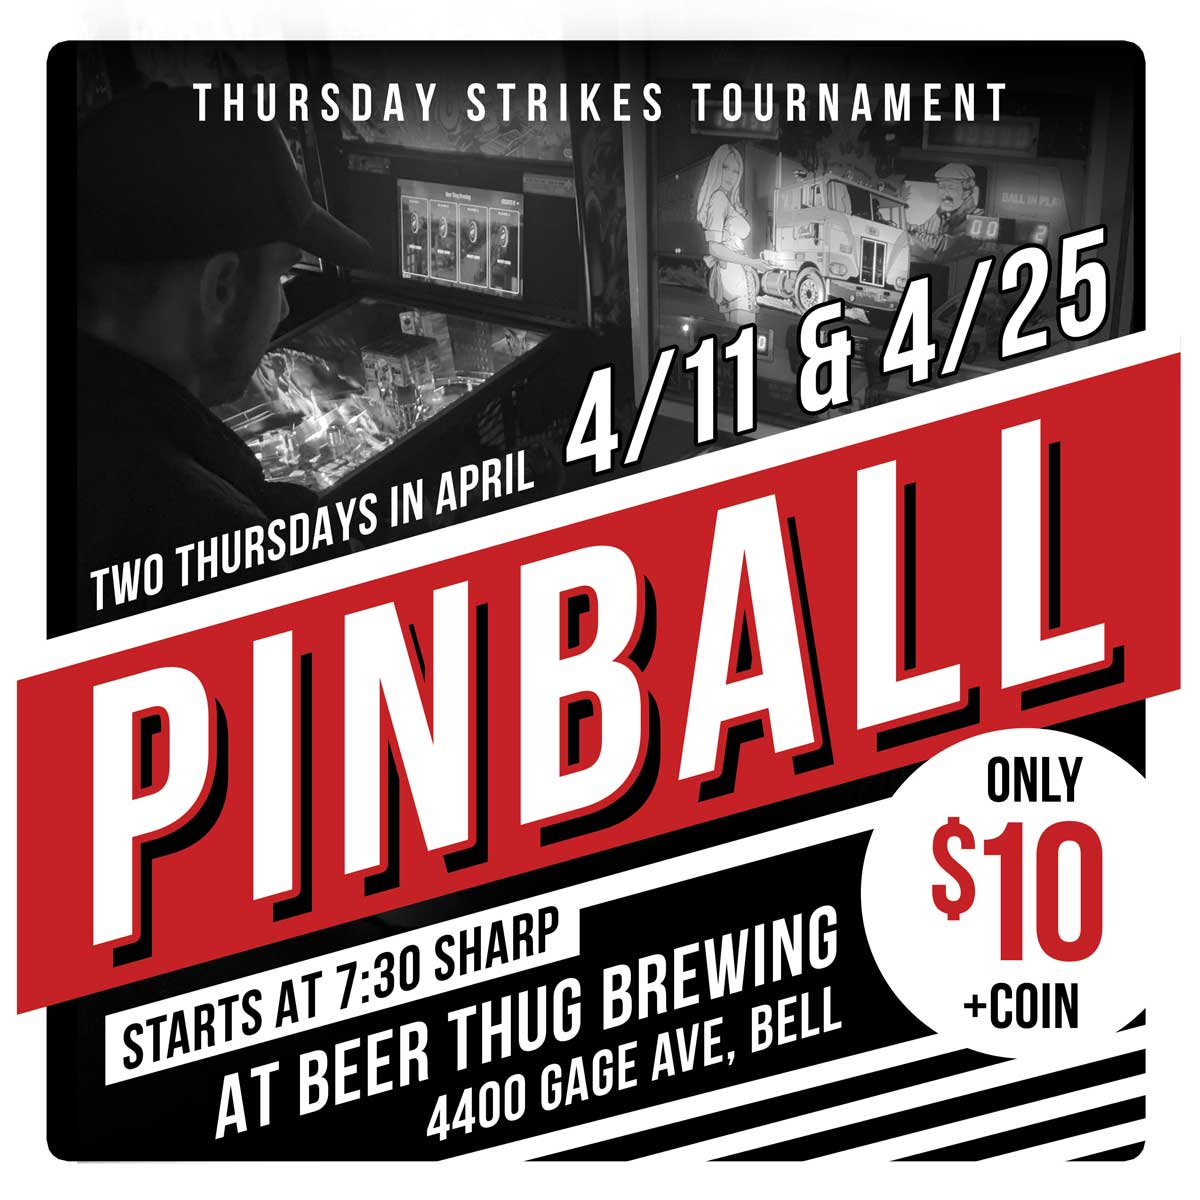 Thursday Strikes at Beer Thug – April 25th!